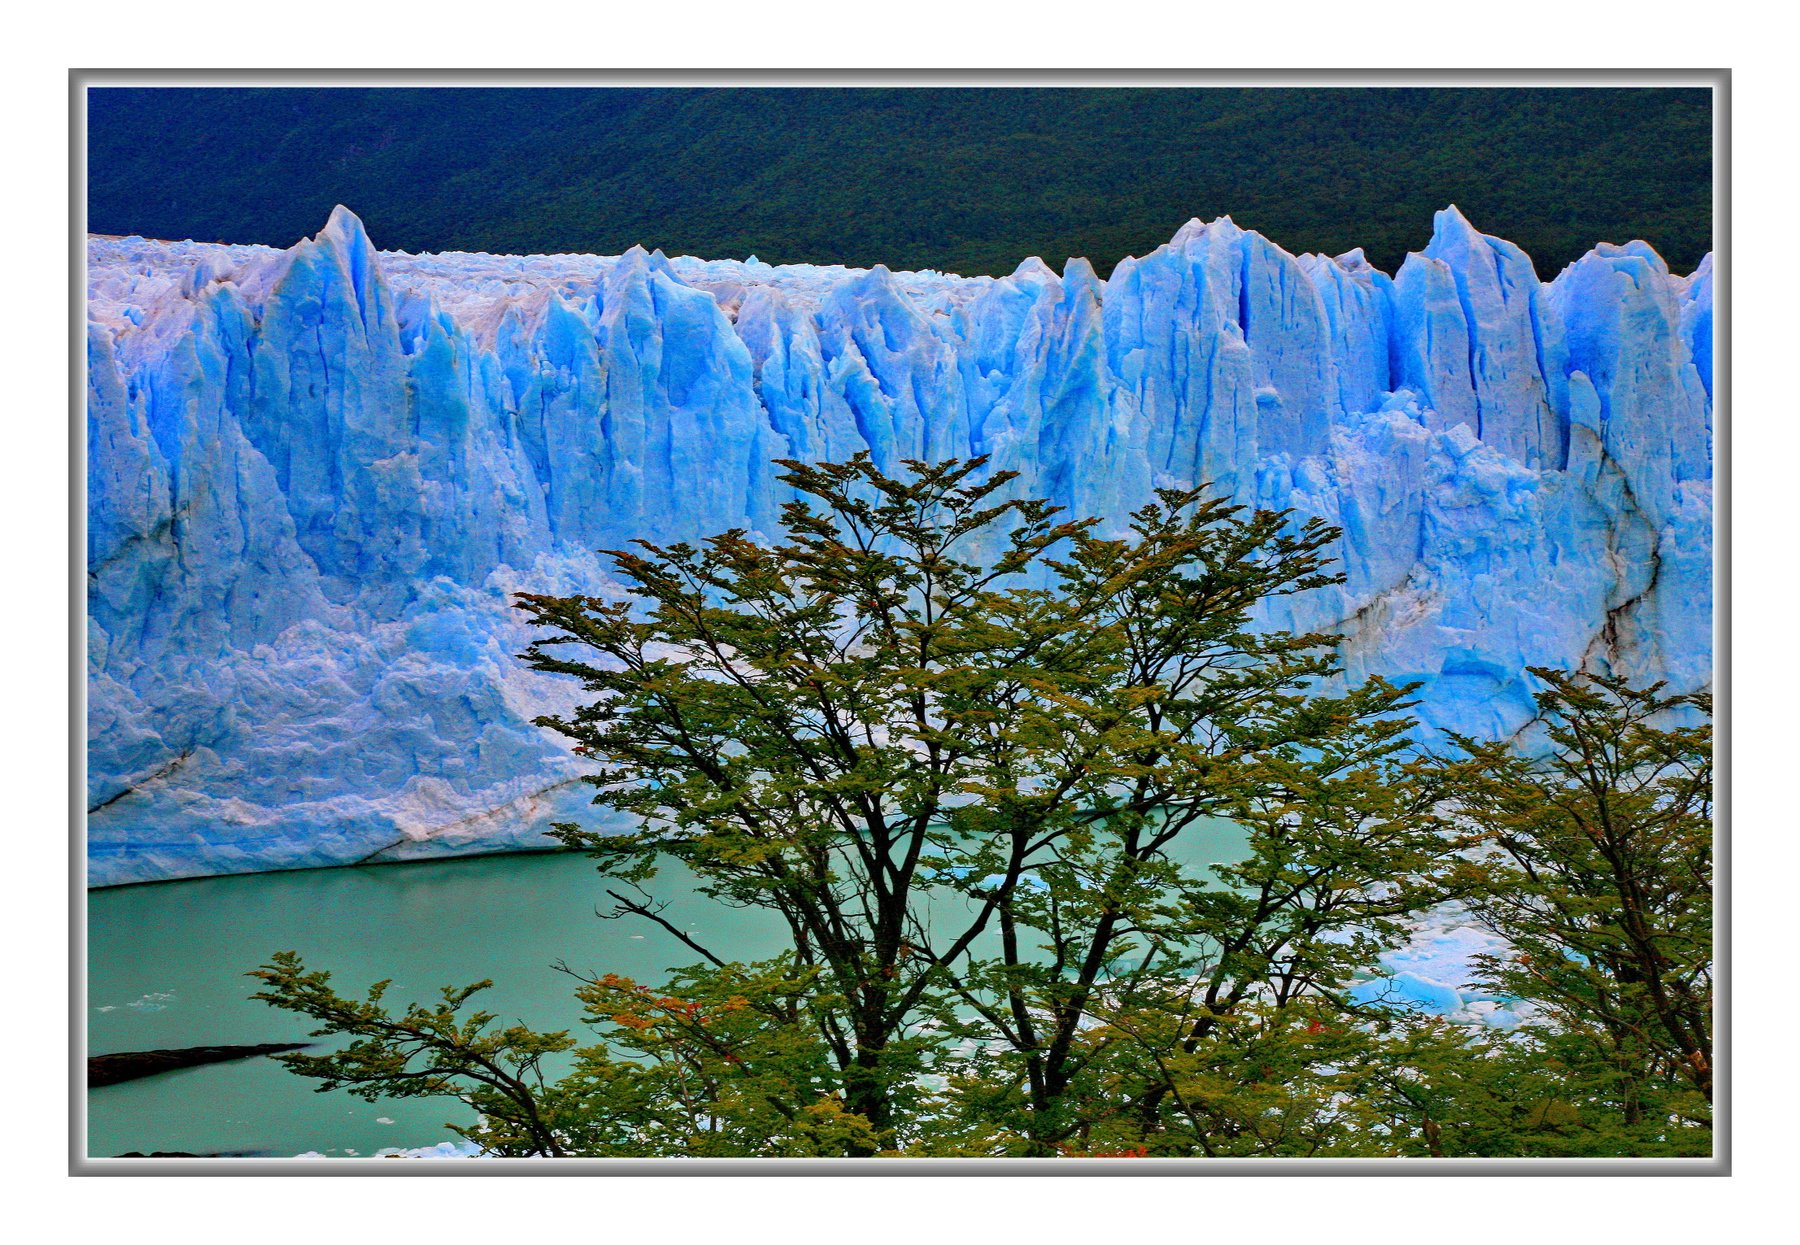 Перито Морено 2 Противостояние... Перито Морено.Аргентина.Ледник